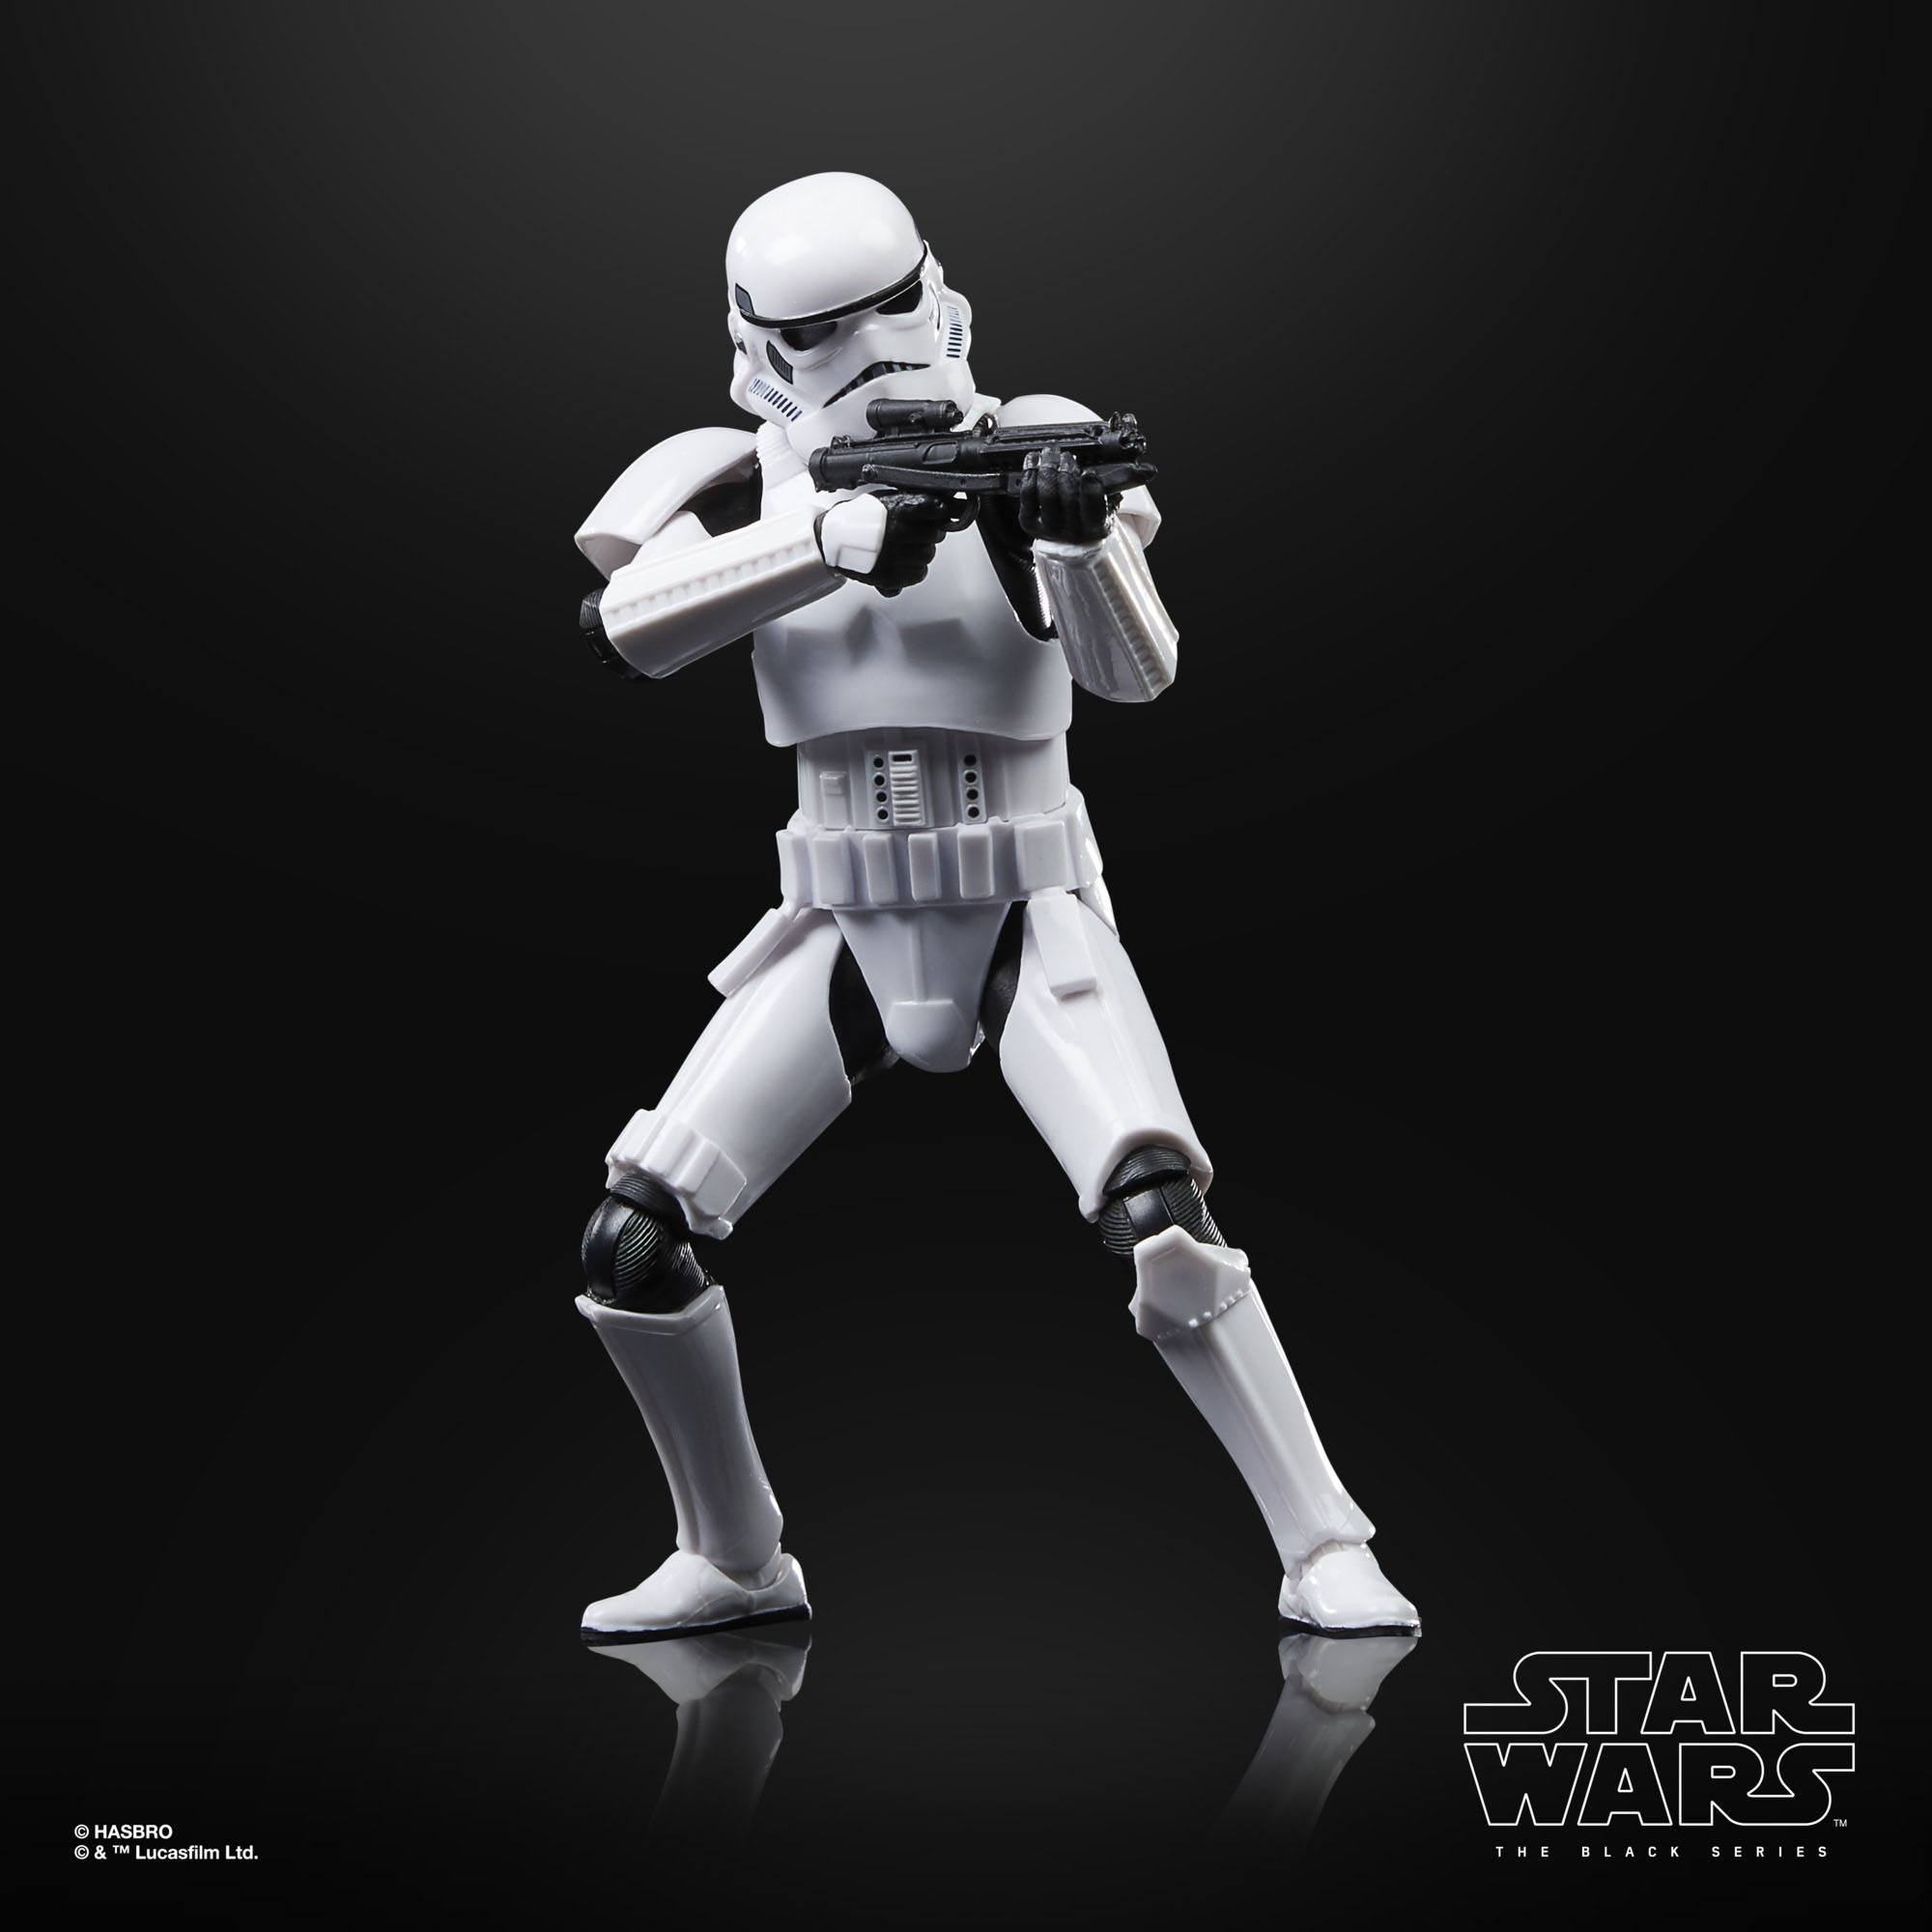 Star Wars Episode VI 40th Anniversary Black Series Actionfigur Stormtrooper 15 cm HASF7079 5010996135582